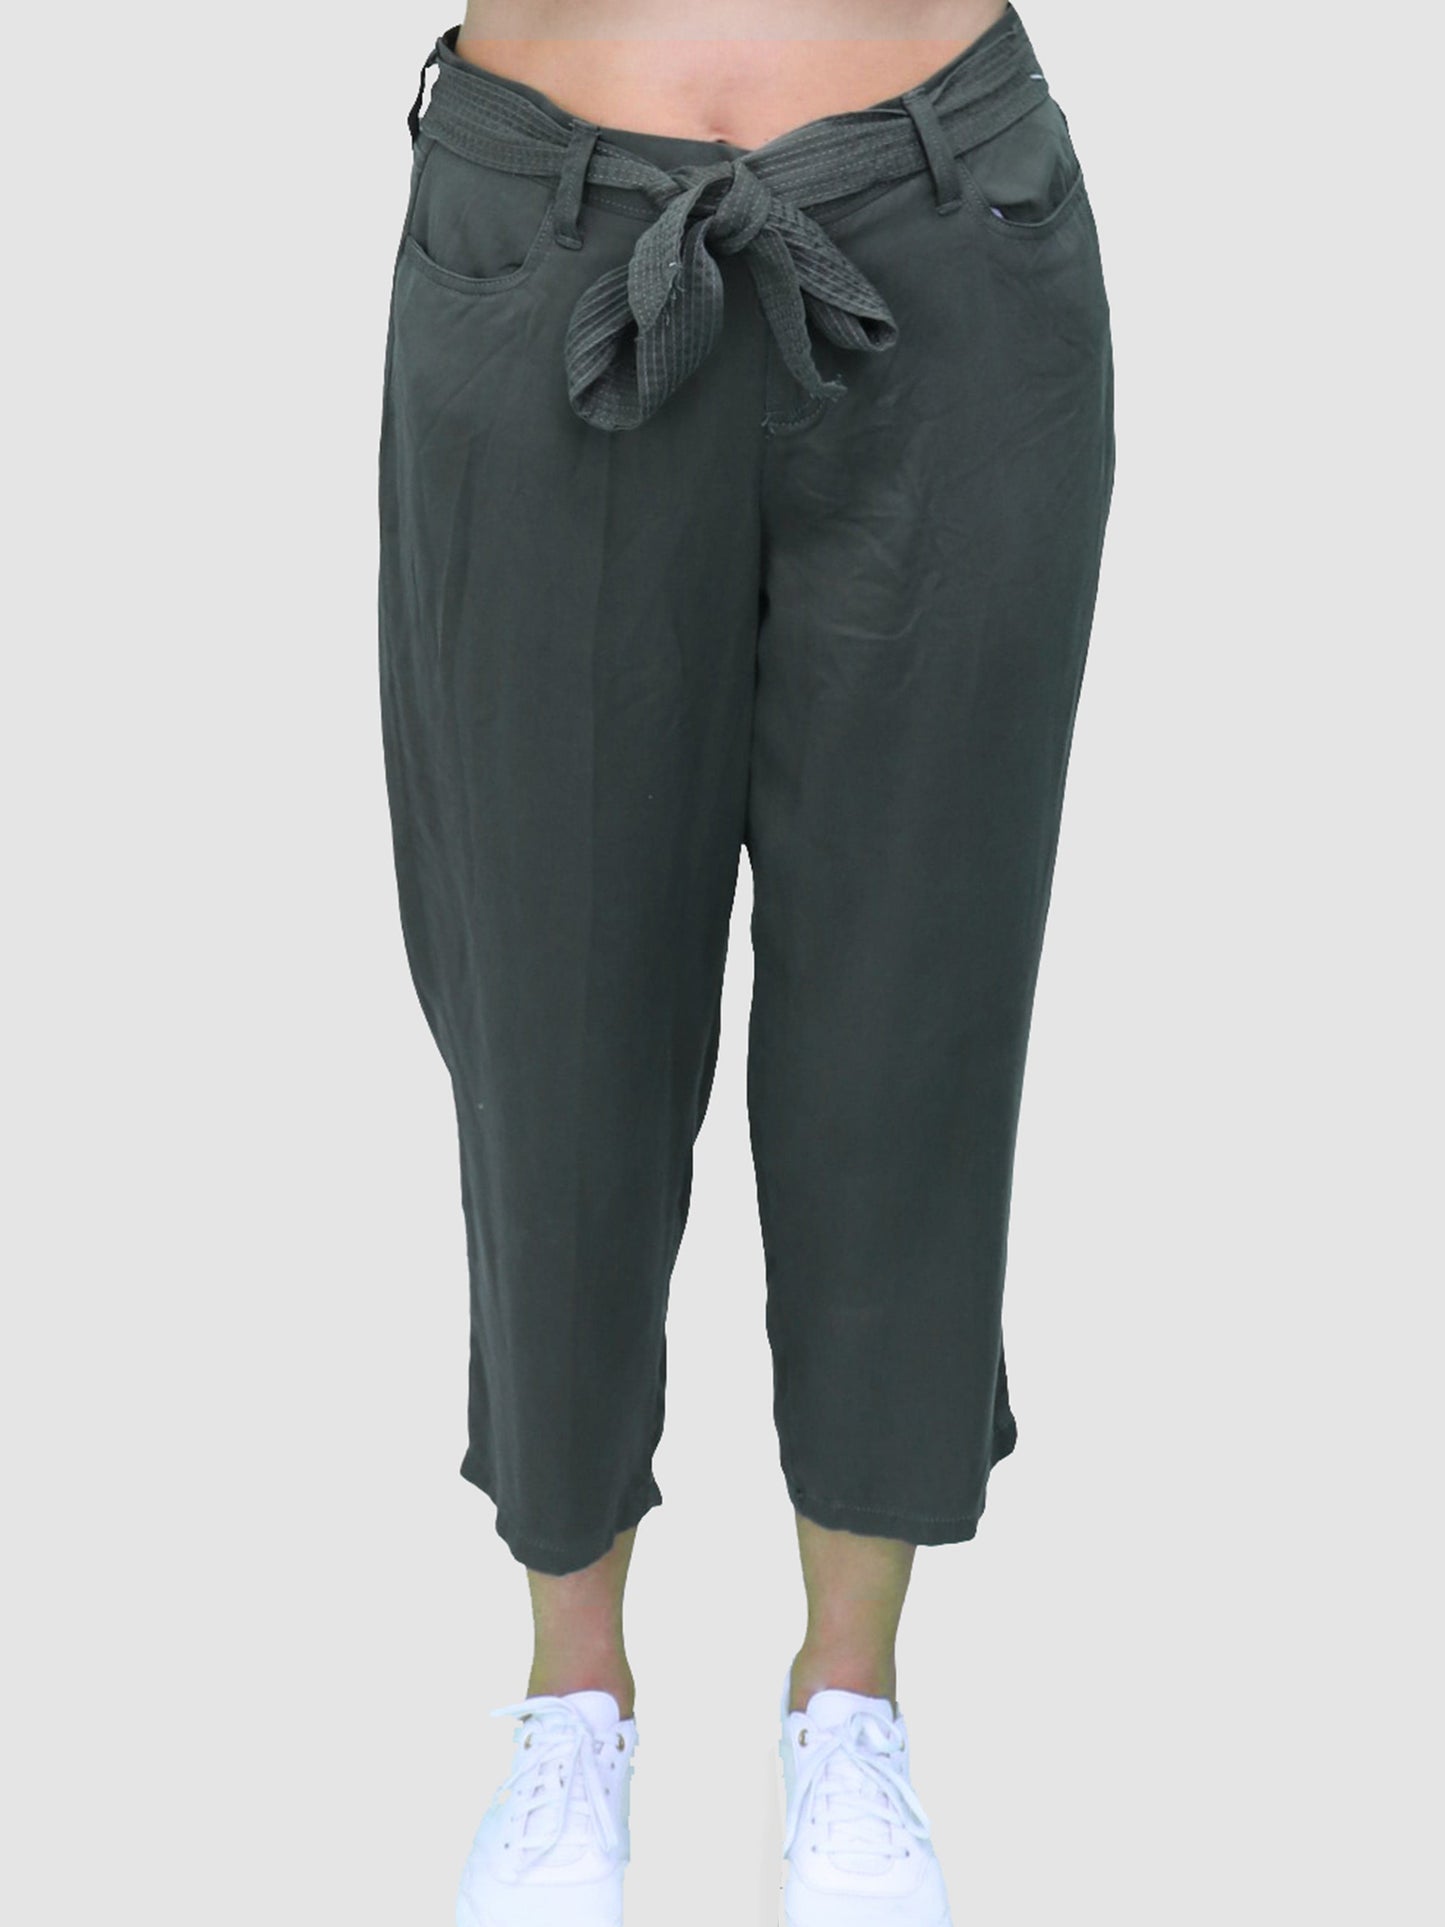 Liz Claiborne Womens Tops Small/ Medium / Olive Pants